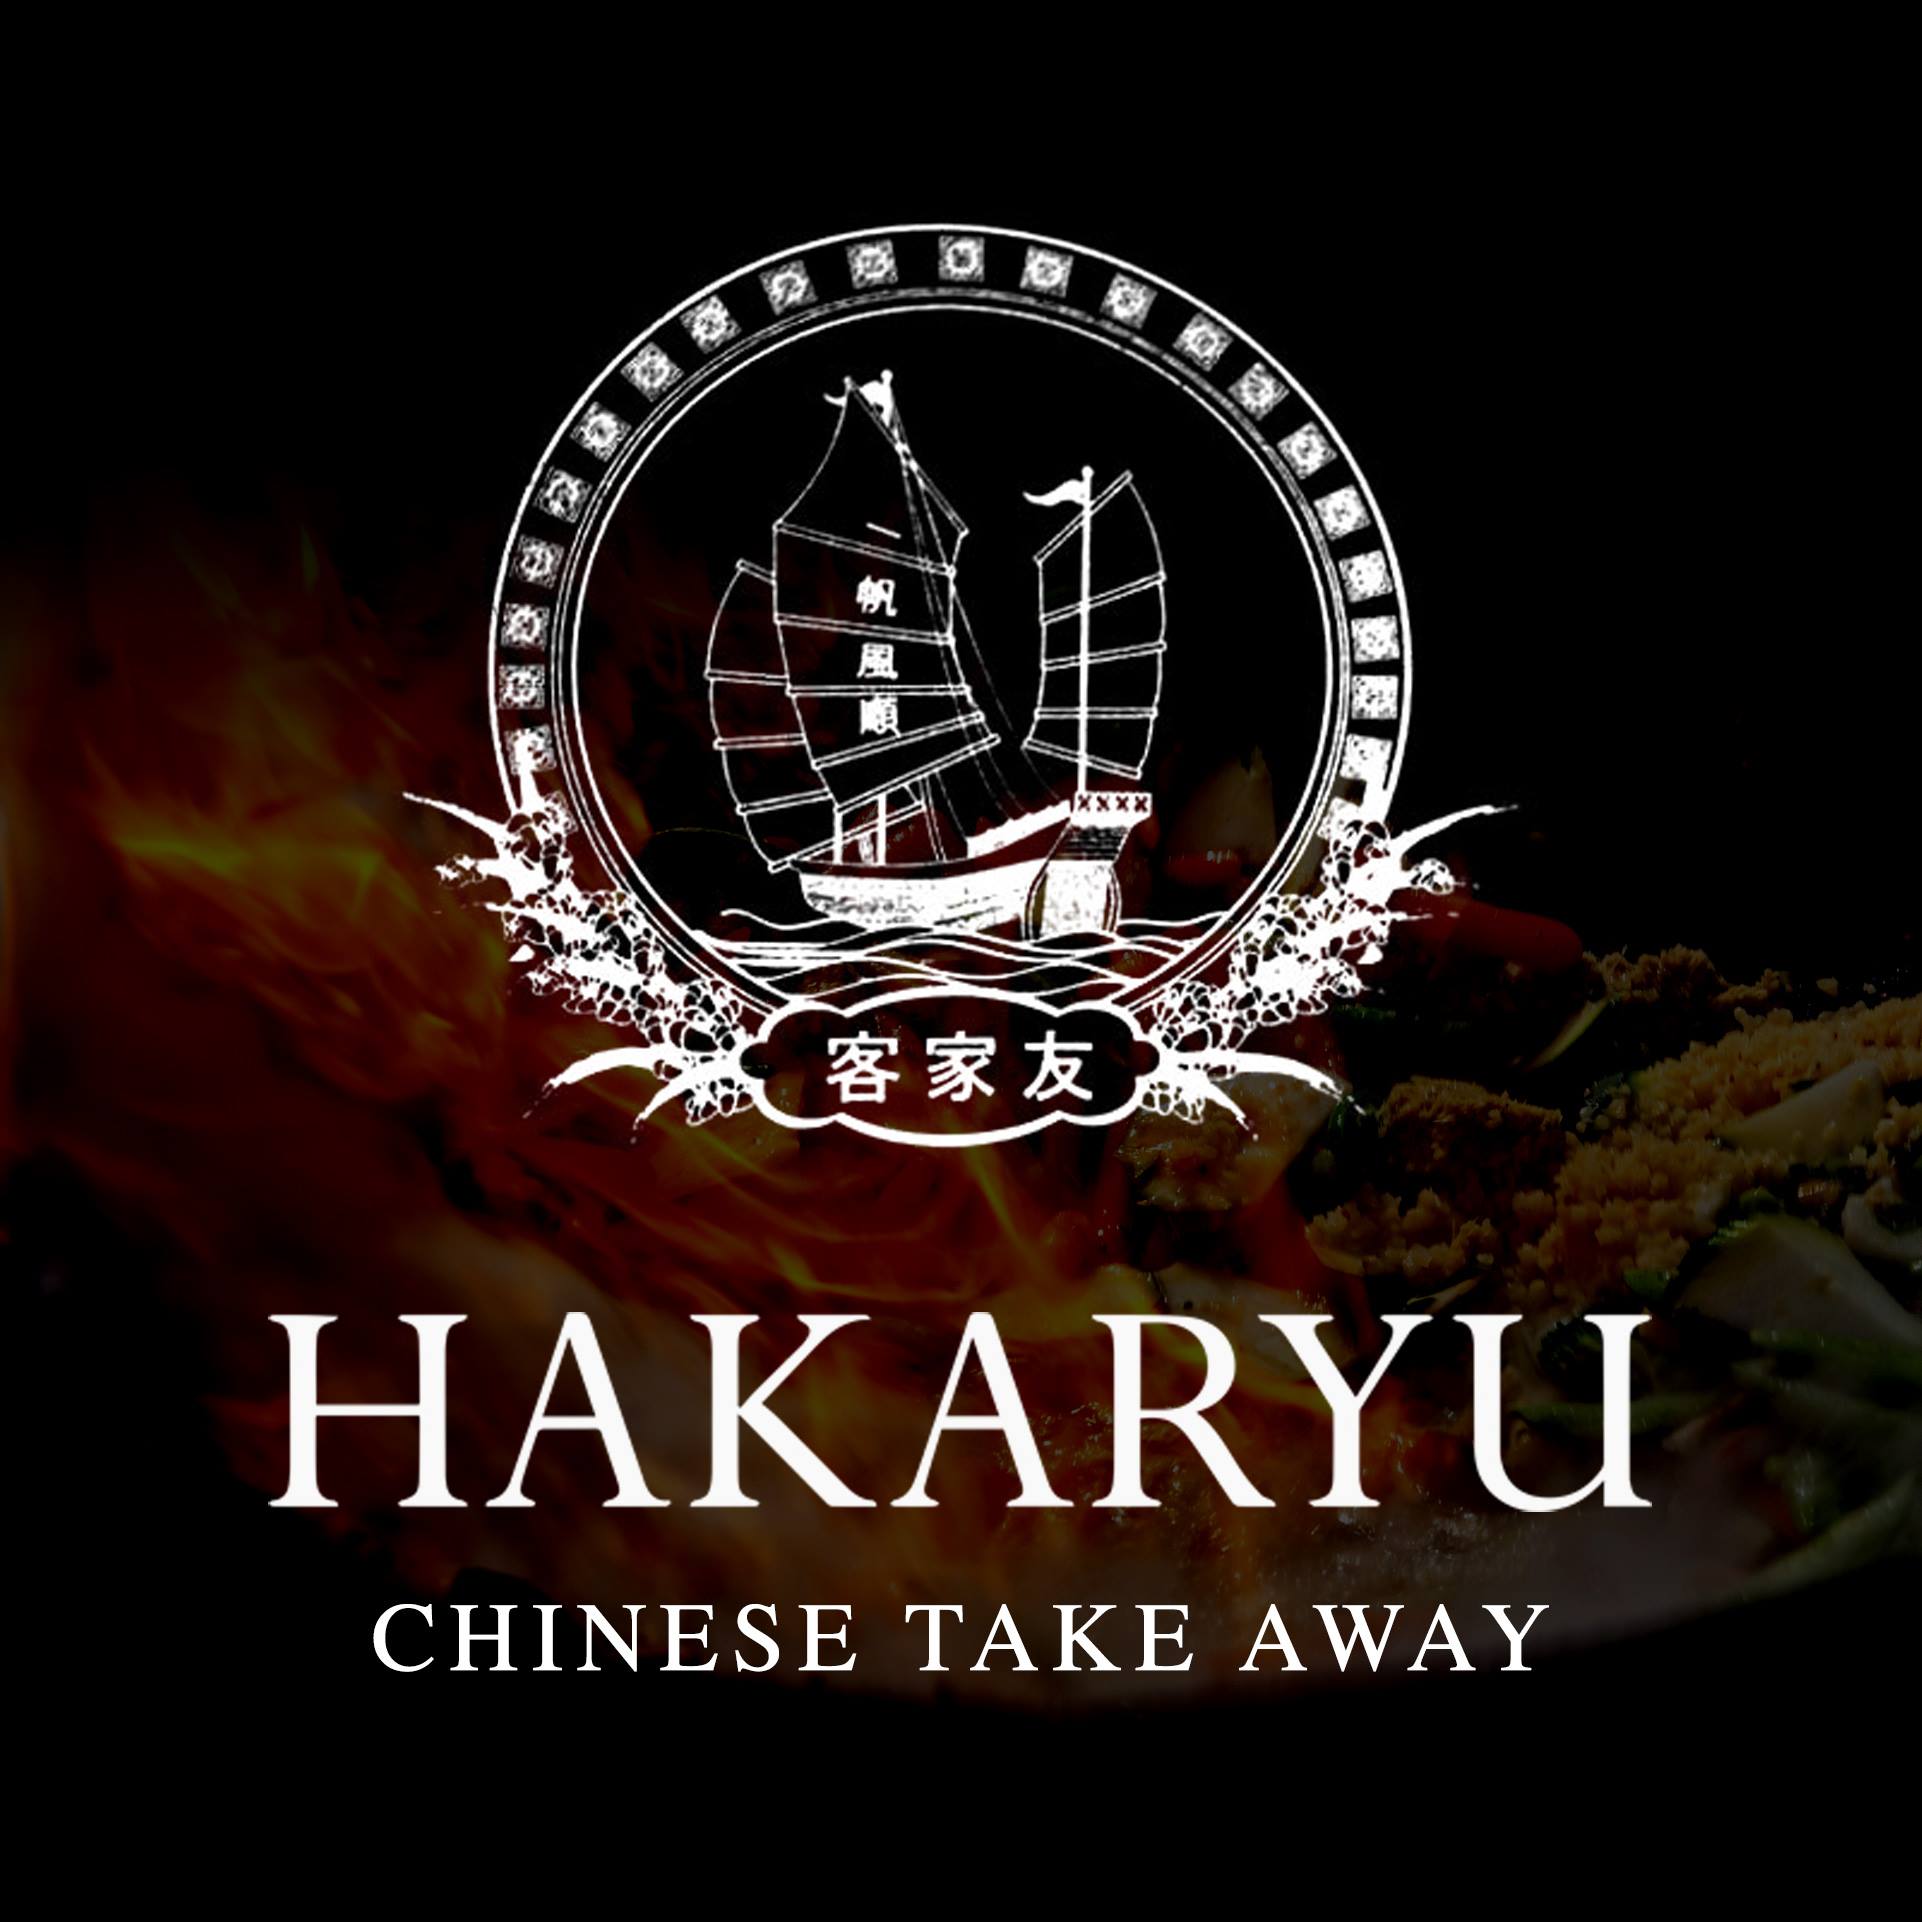 Hakaryu Chinese Takeaway